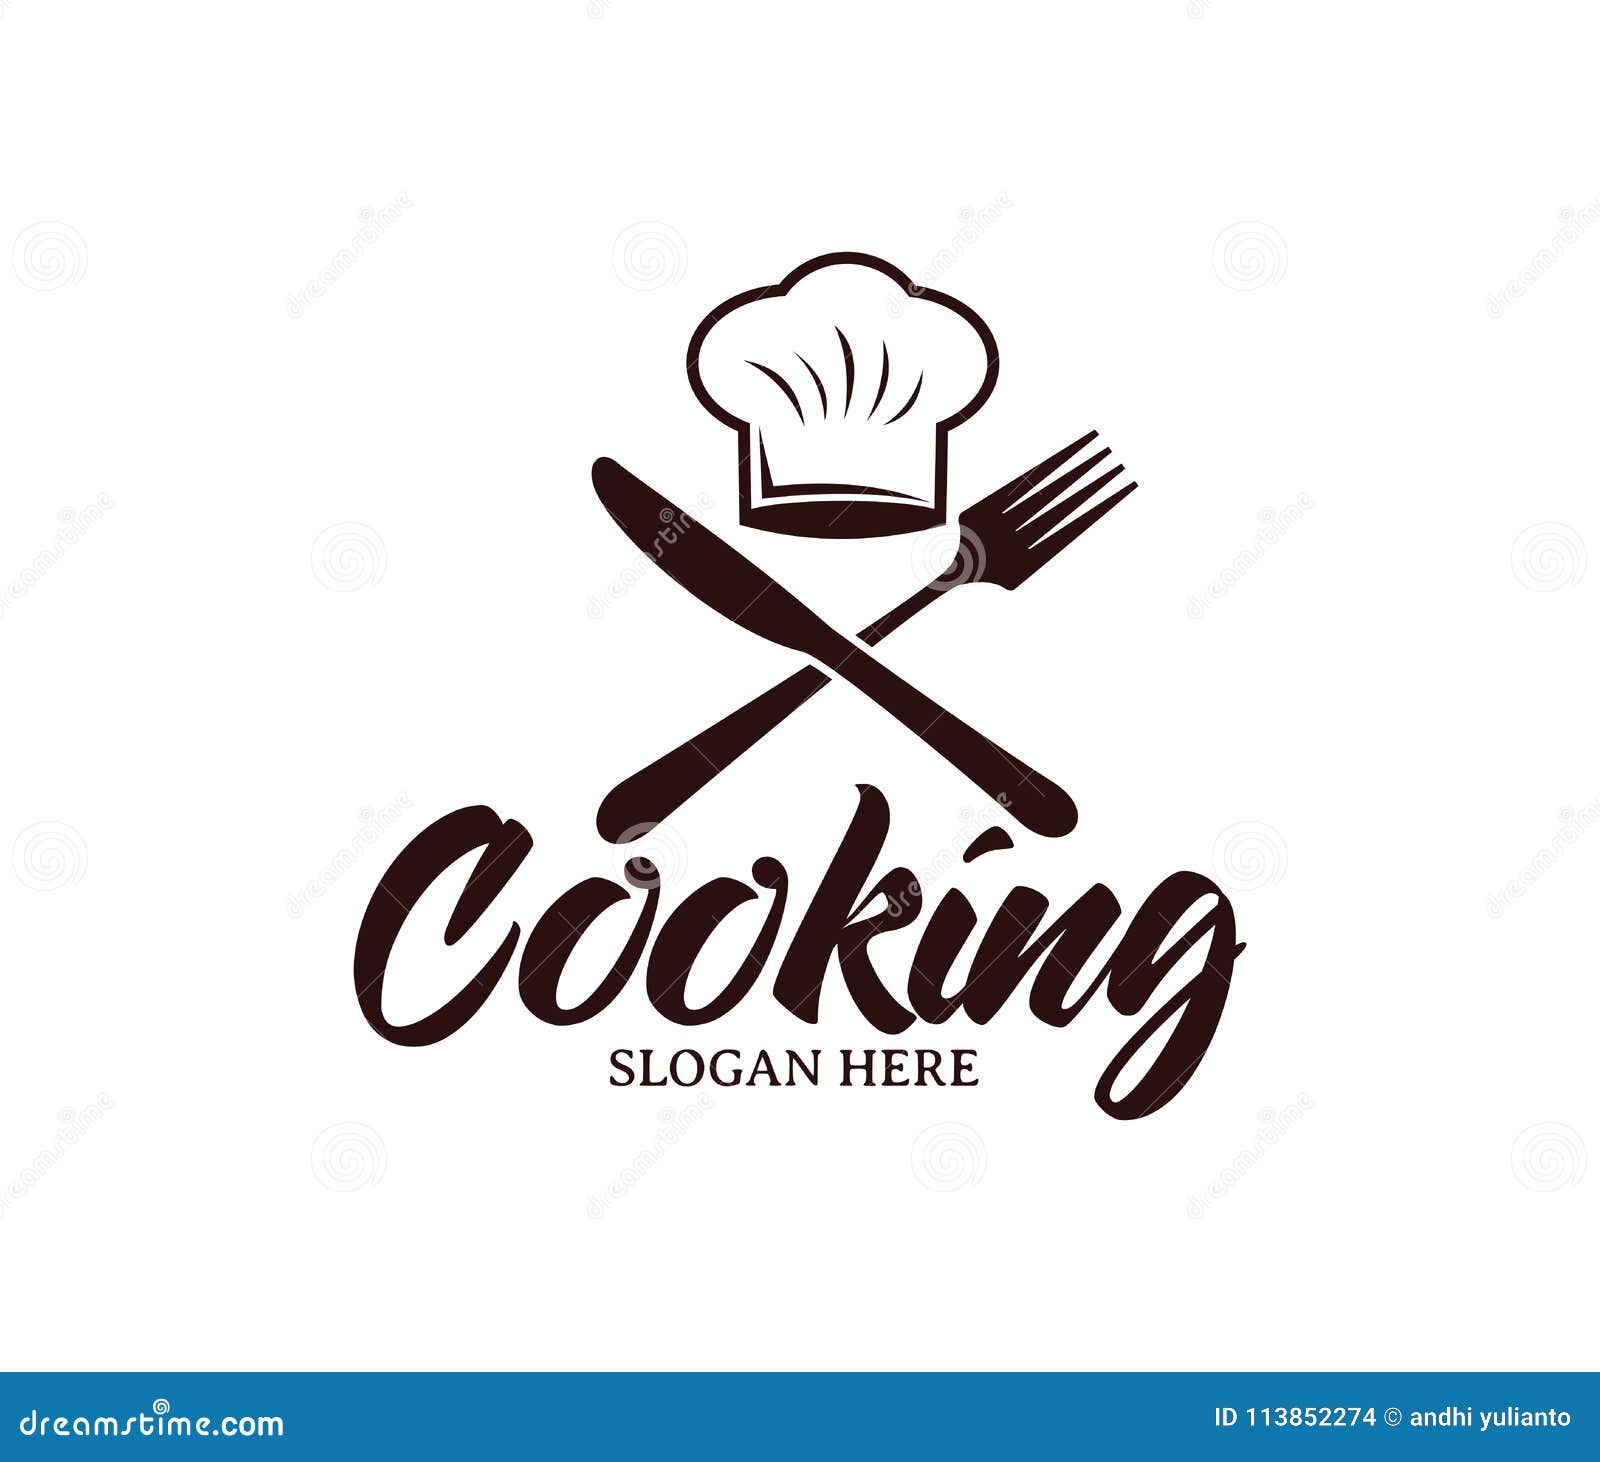  Restaurant Cafe Bistro Cooking Chef Logo Design Stock 